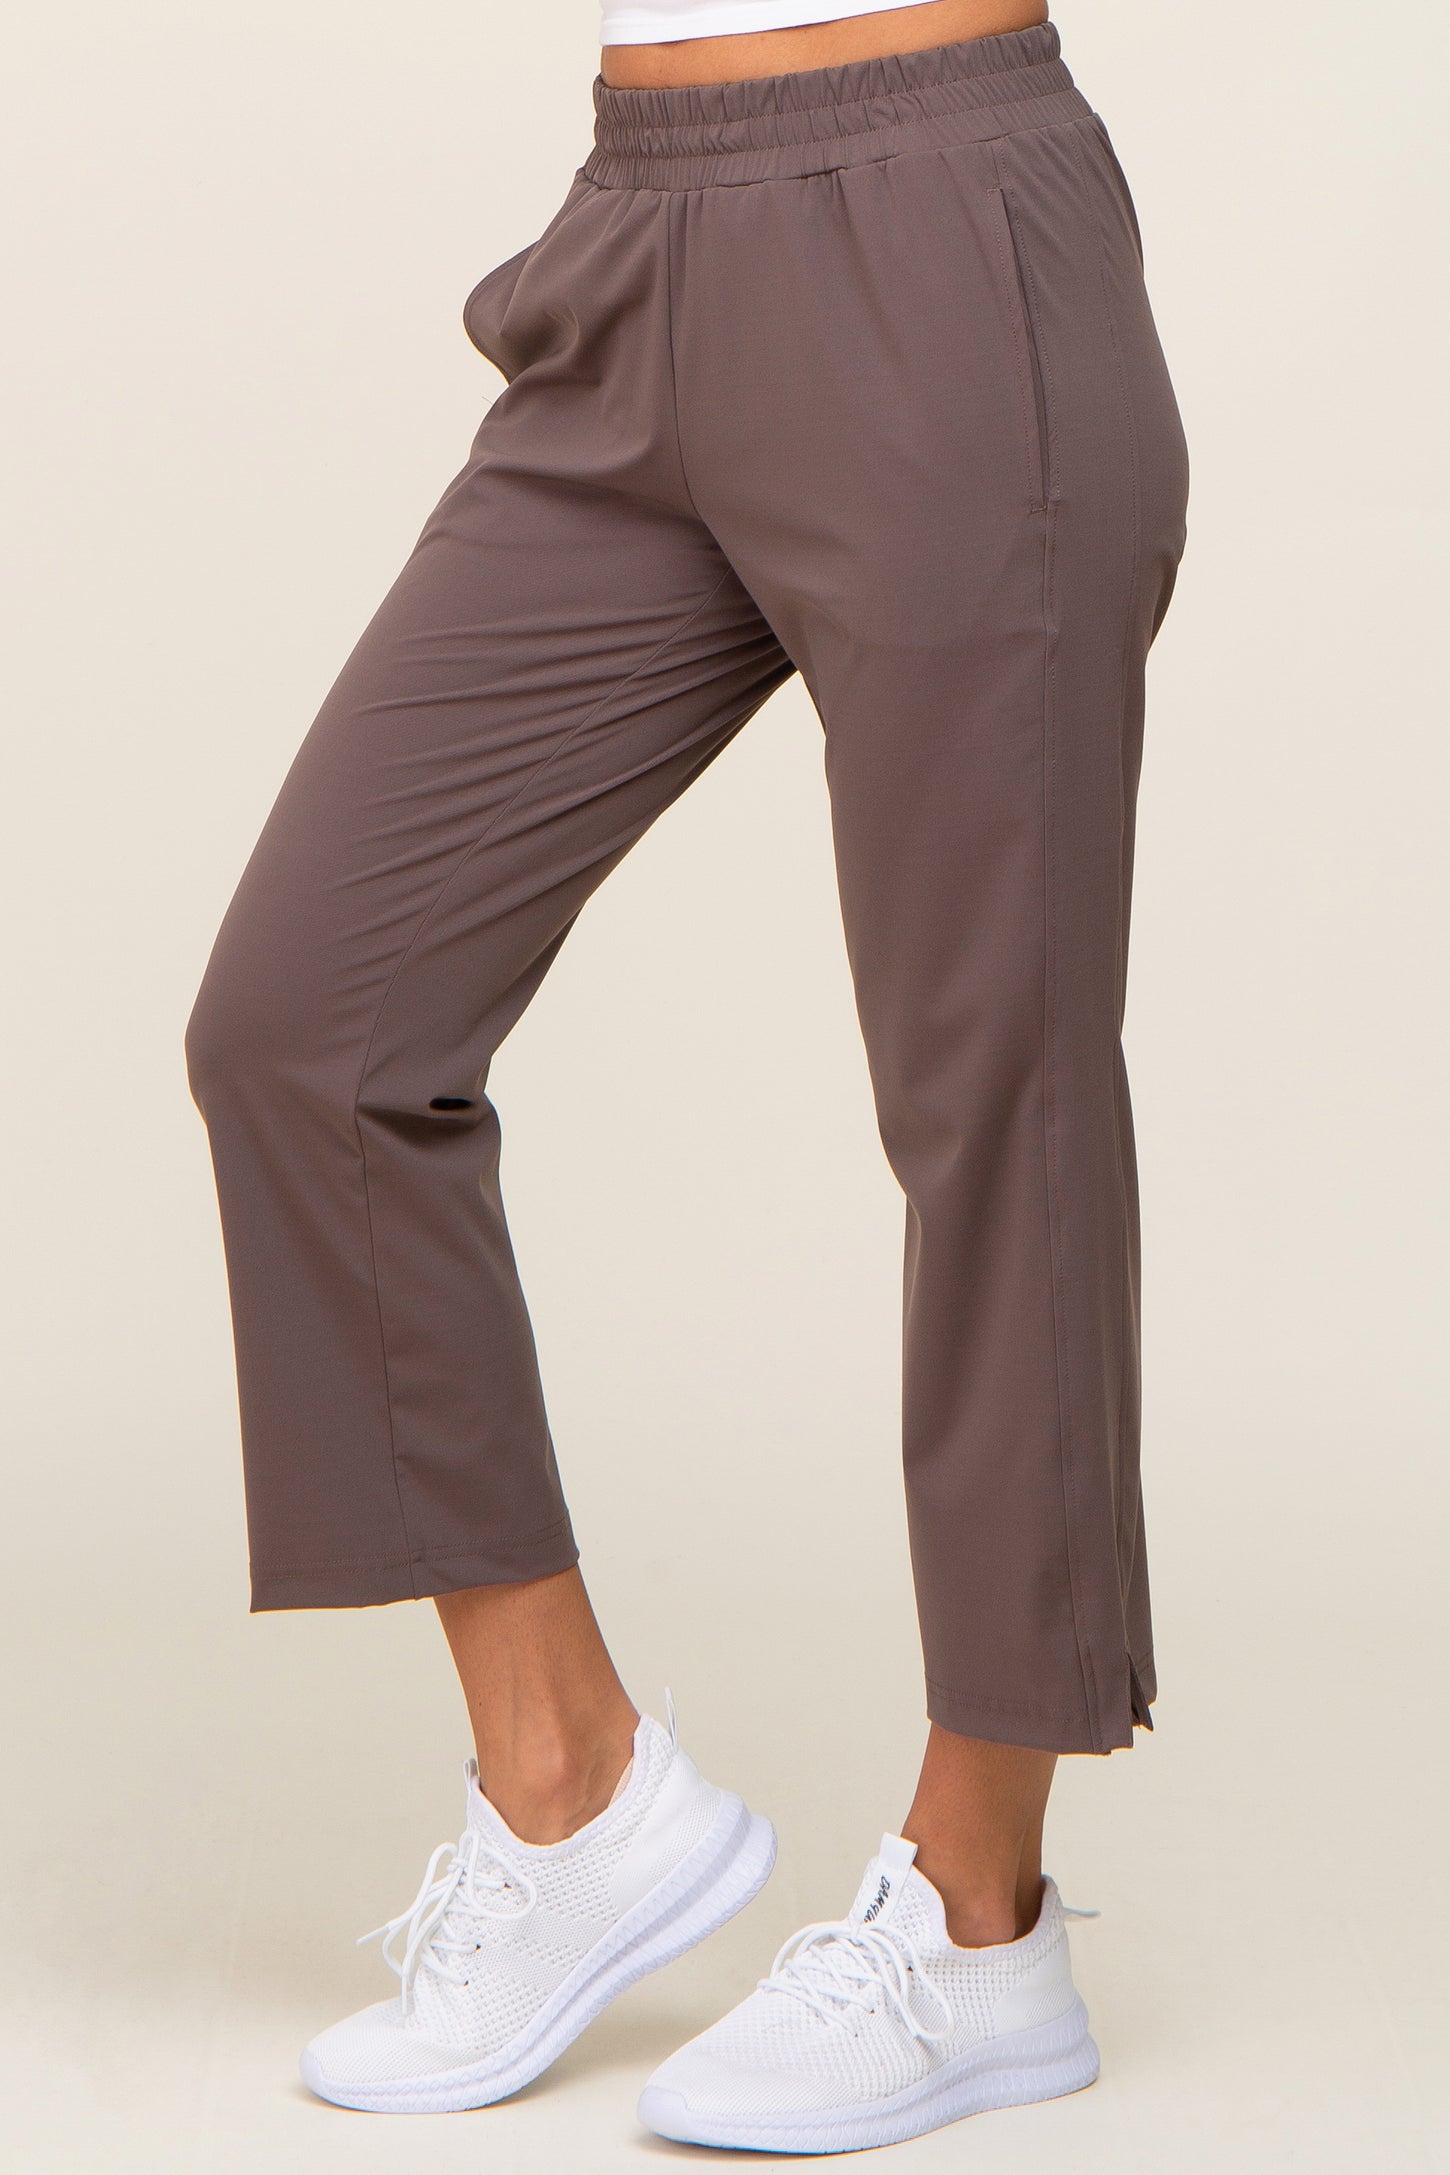 Brown Elastic Waist Capri Pants– PinkBlush